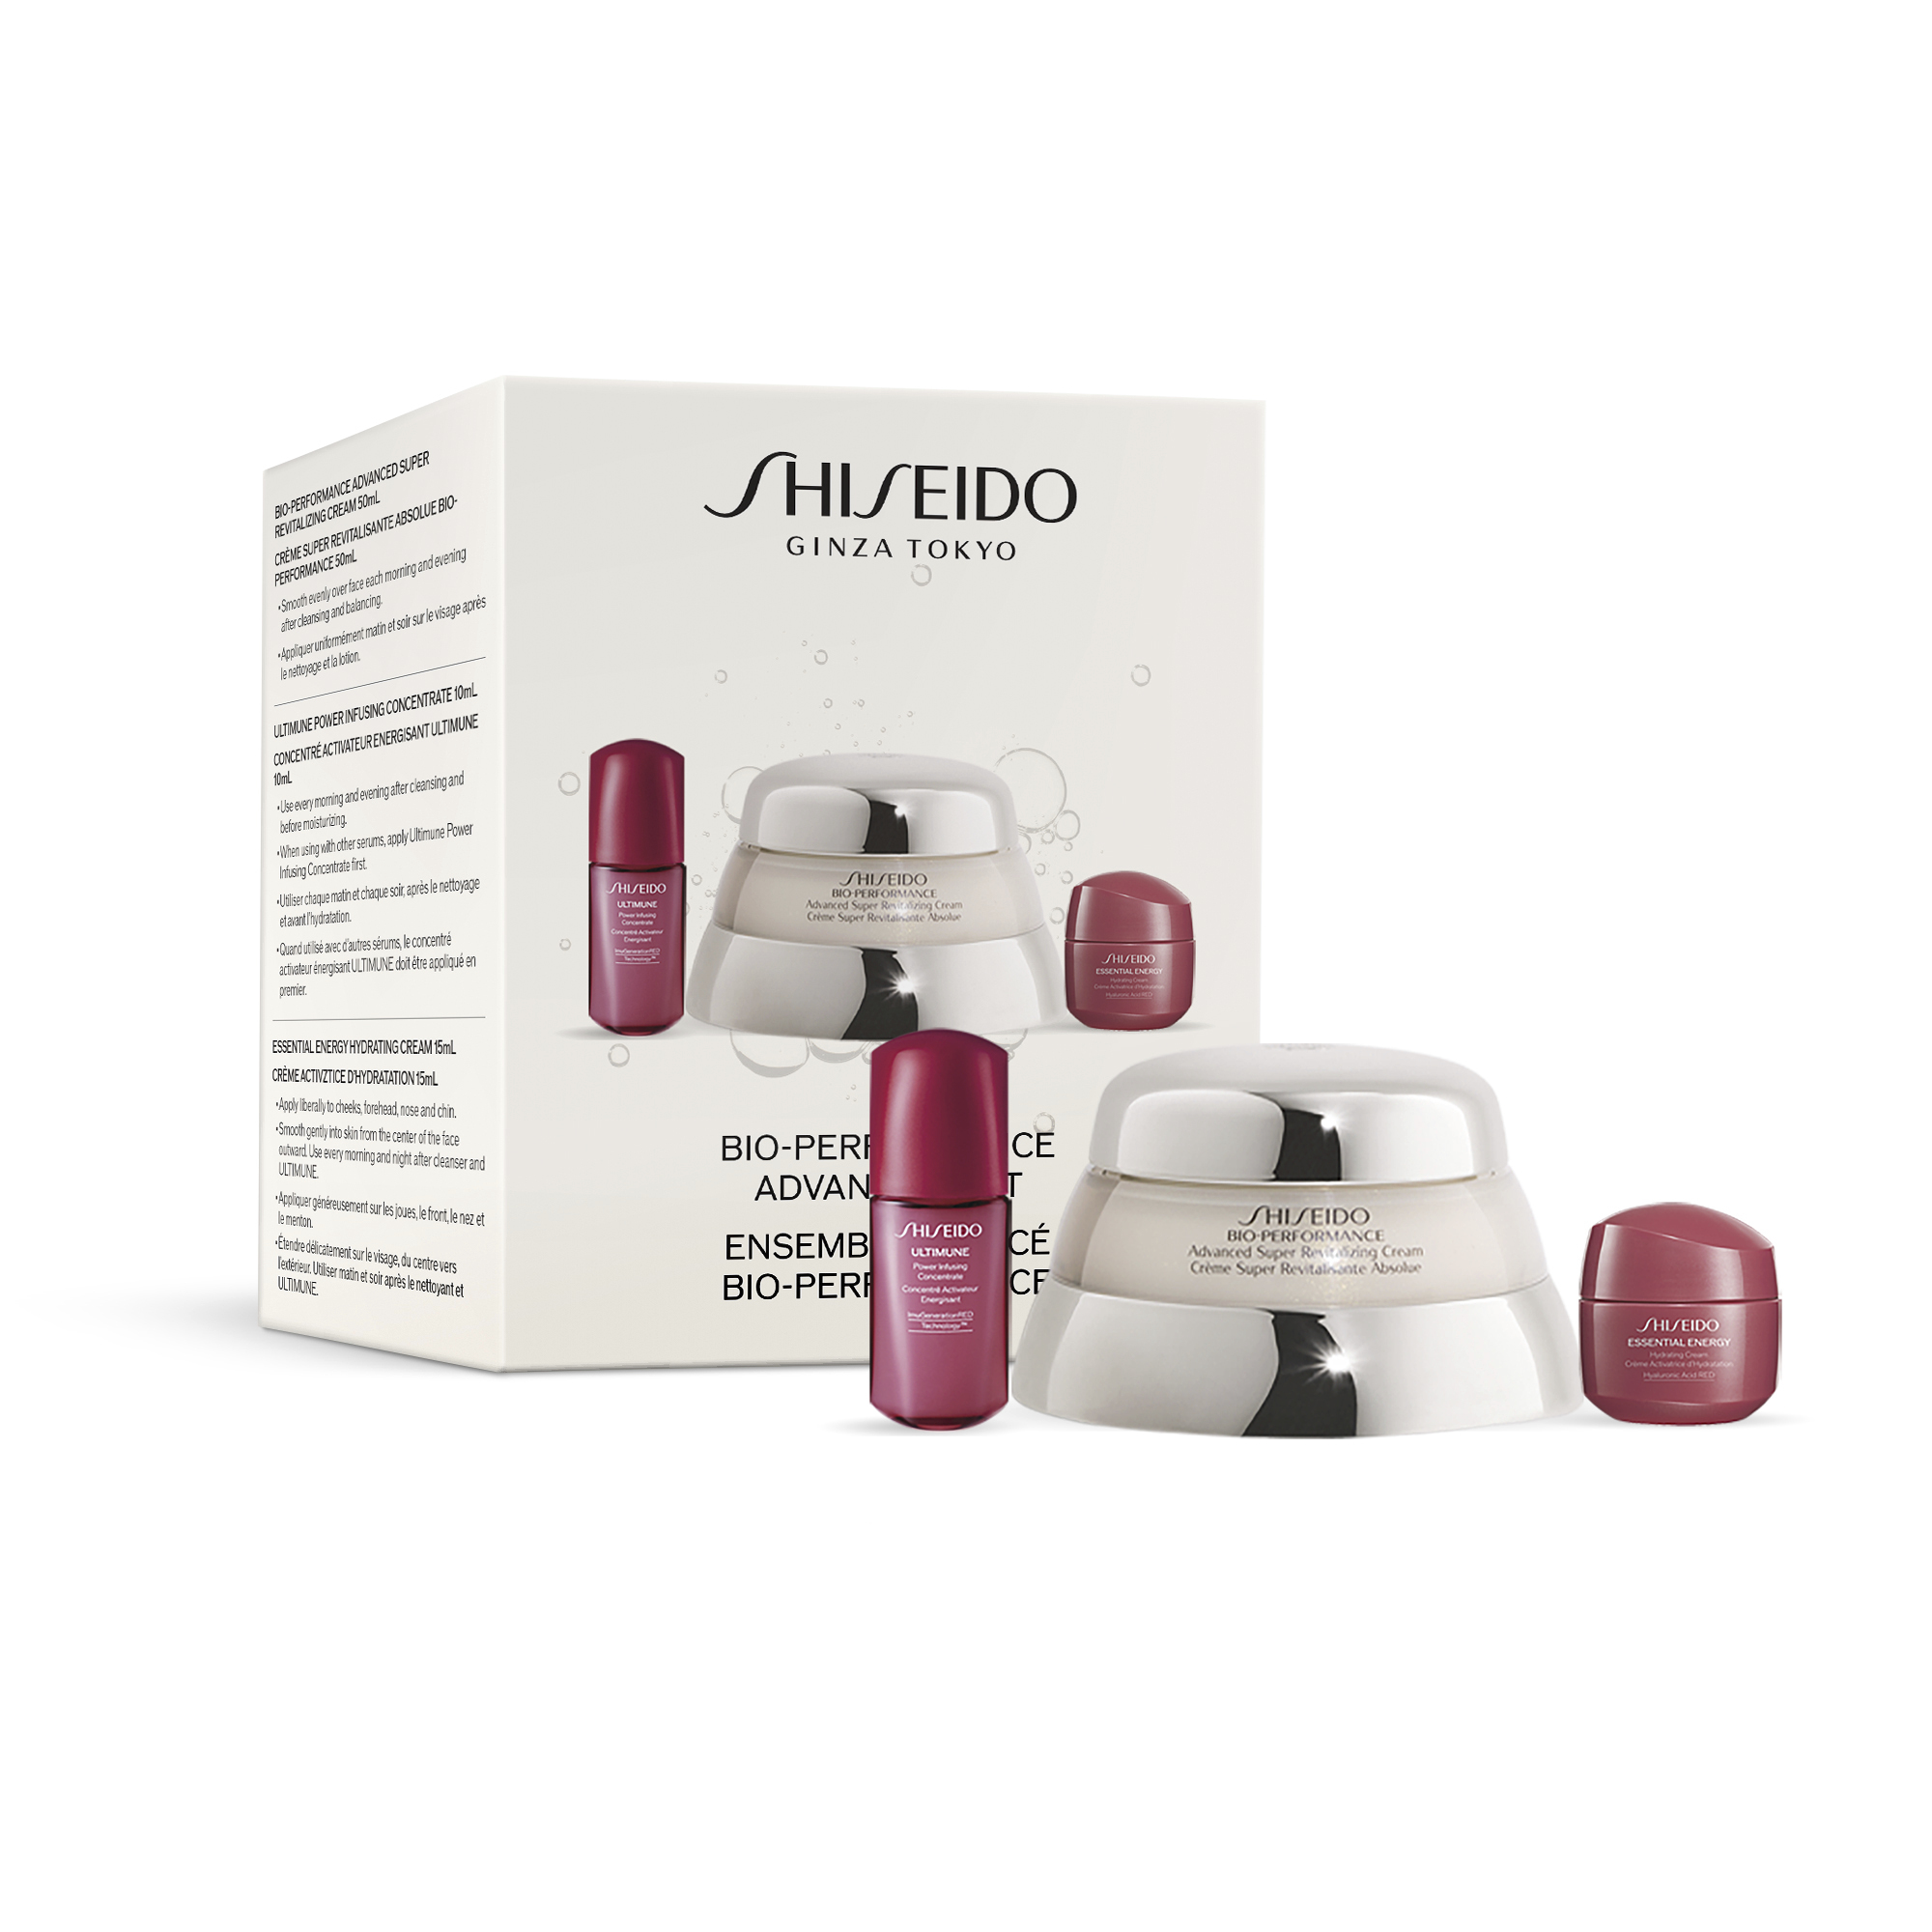 Shiseido Bio-Performance Advanced Set (Value $163)